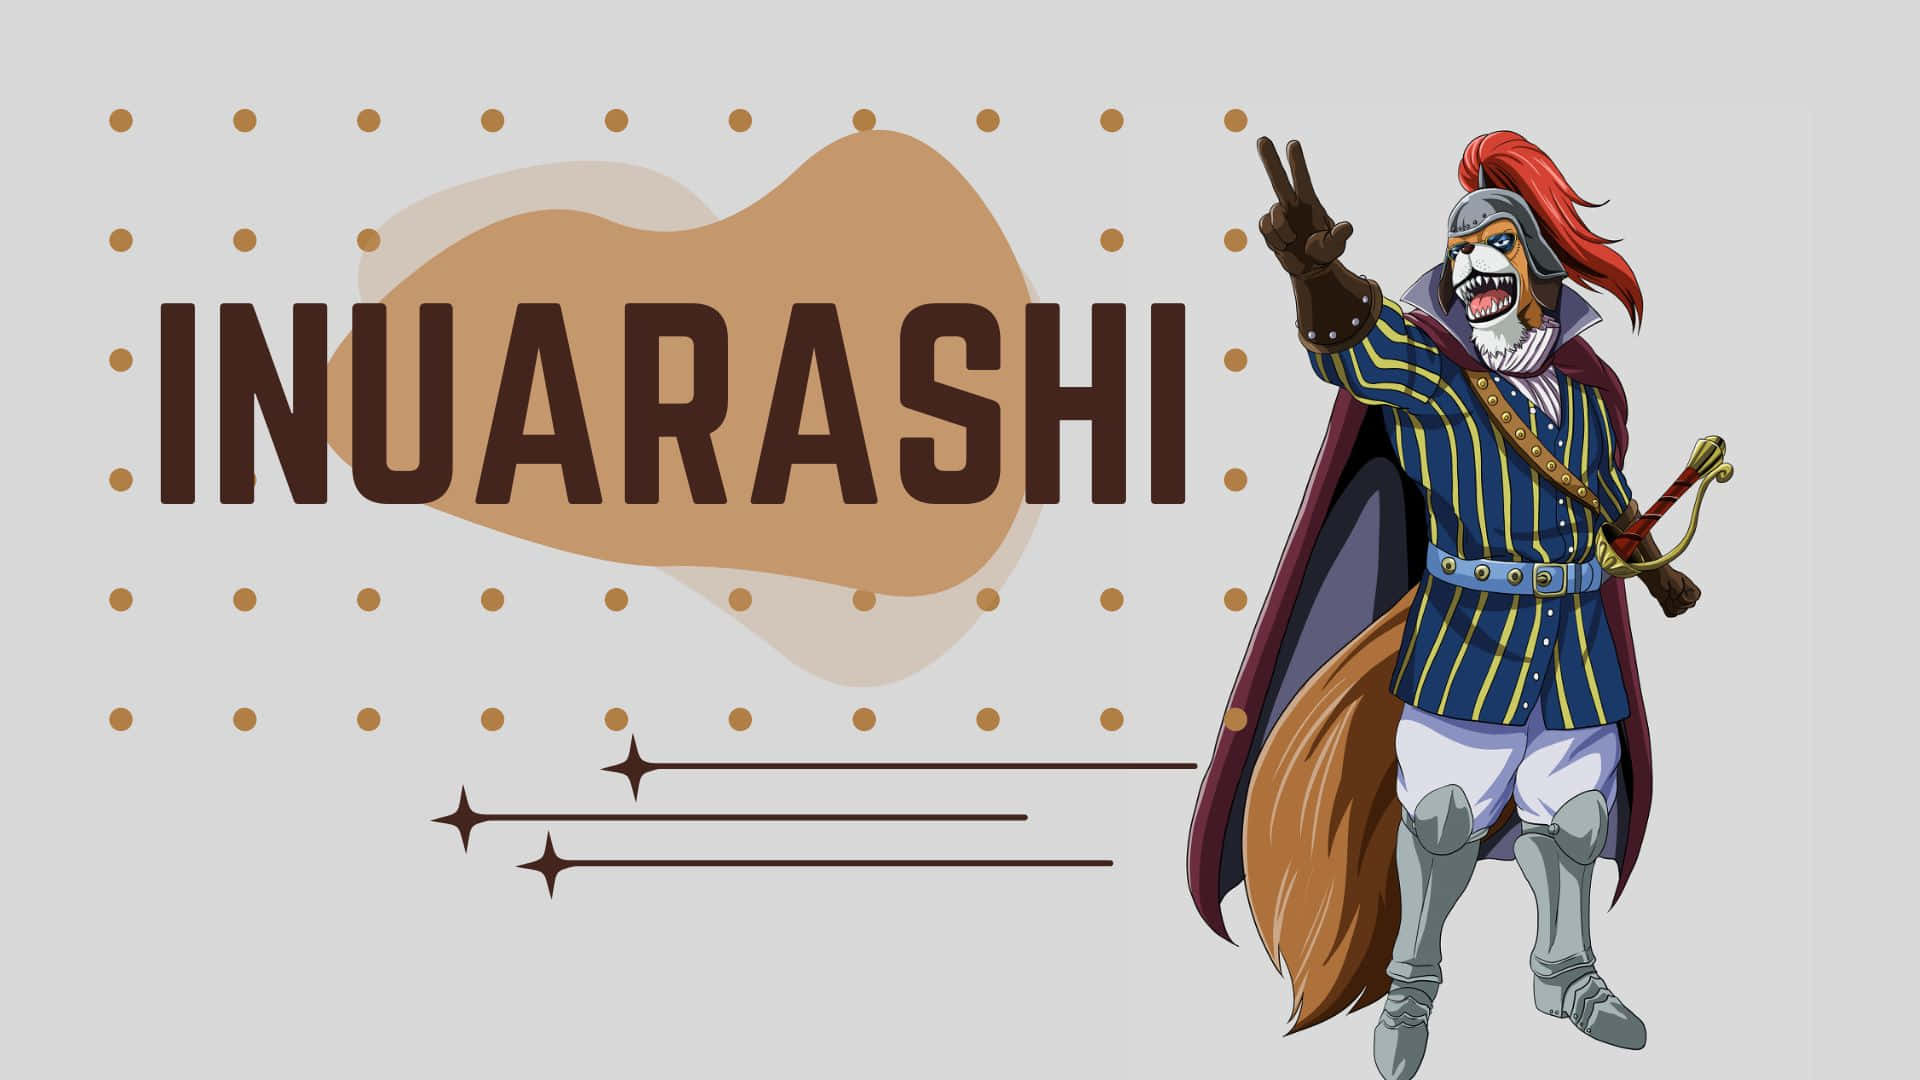 Inuarashi, a leader of the Inuarashi Musketeer Squad Wallpaper